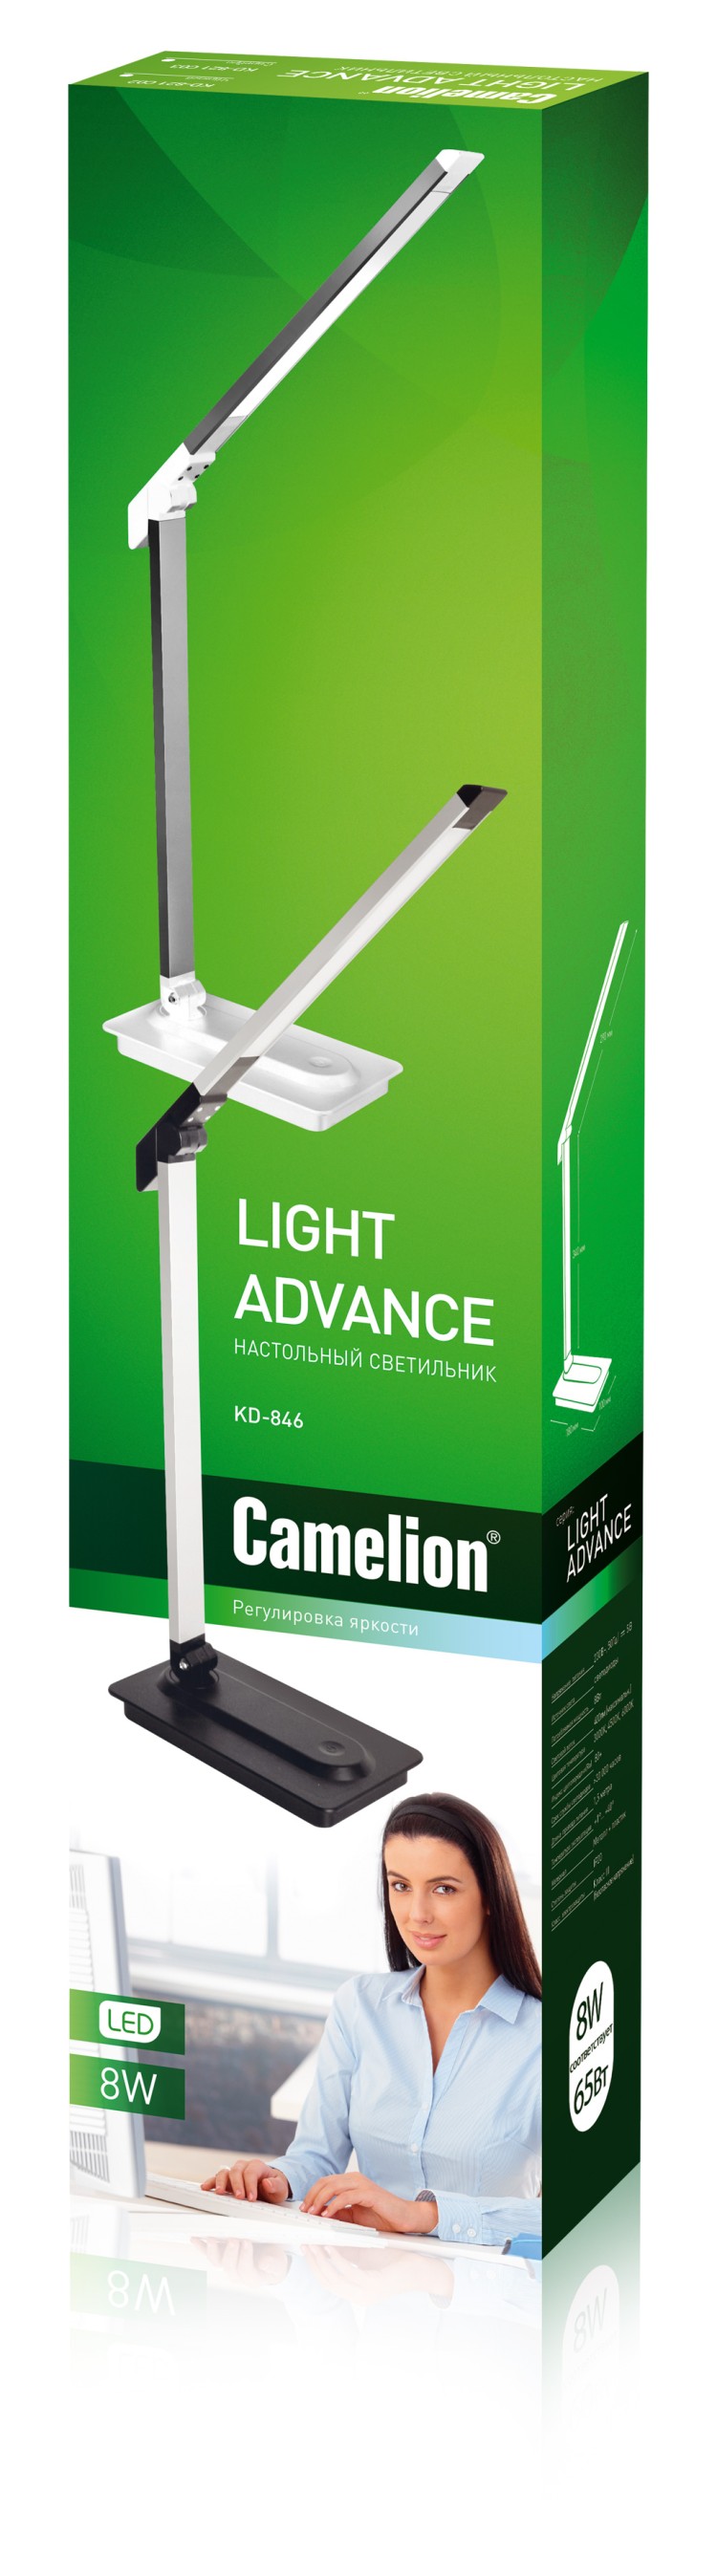 Светильник наст KD-846  C01 белый LED (8Вт,сенс.регулир. яркости, 3 цвет темп)Camelion